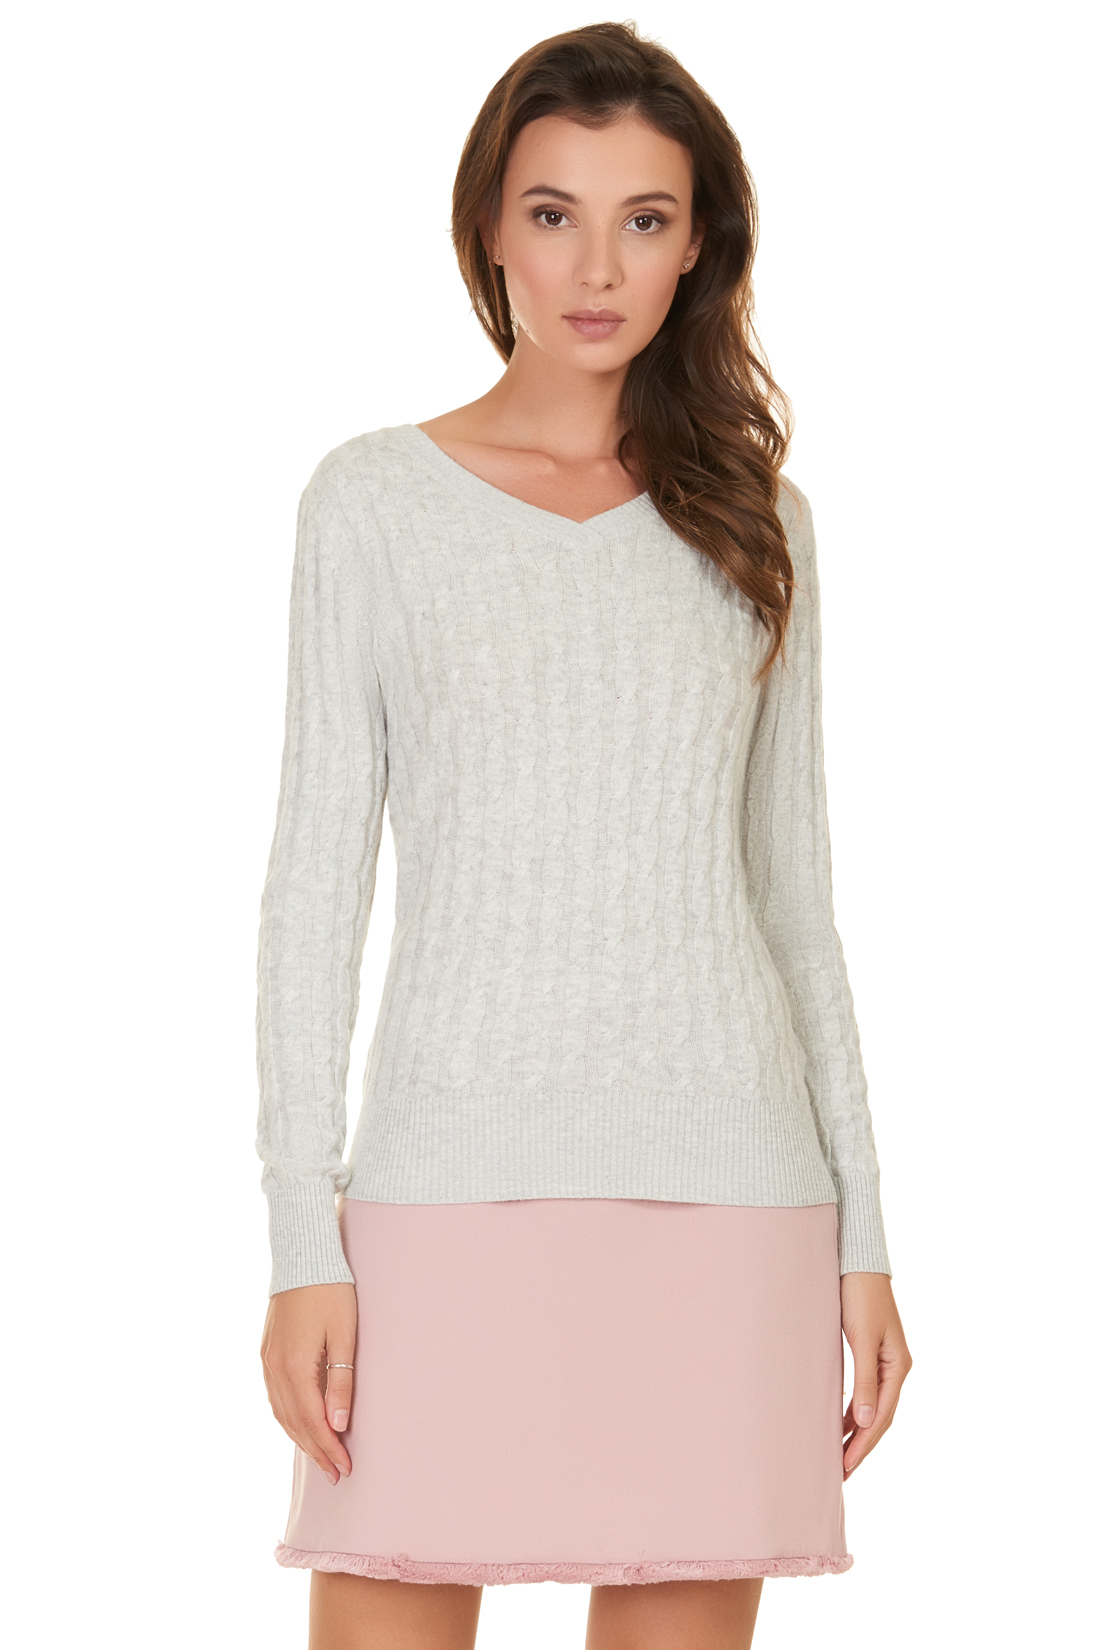 Базовый пуловер с узором и ангорой (арт. baon B137703), размер XS, цвет silver melange#серый Базовый пуловер с узором и ангорой (арт. baon B137703) - фото 1